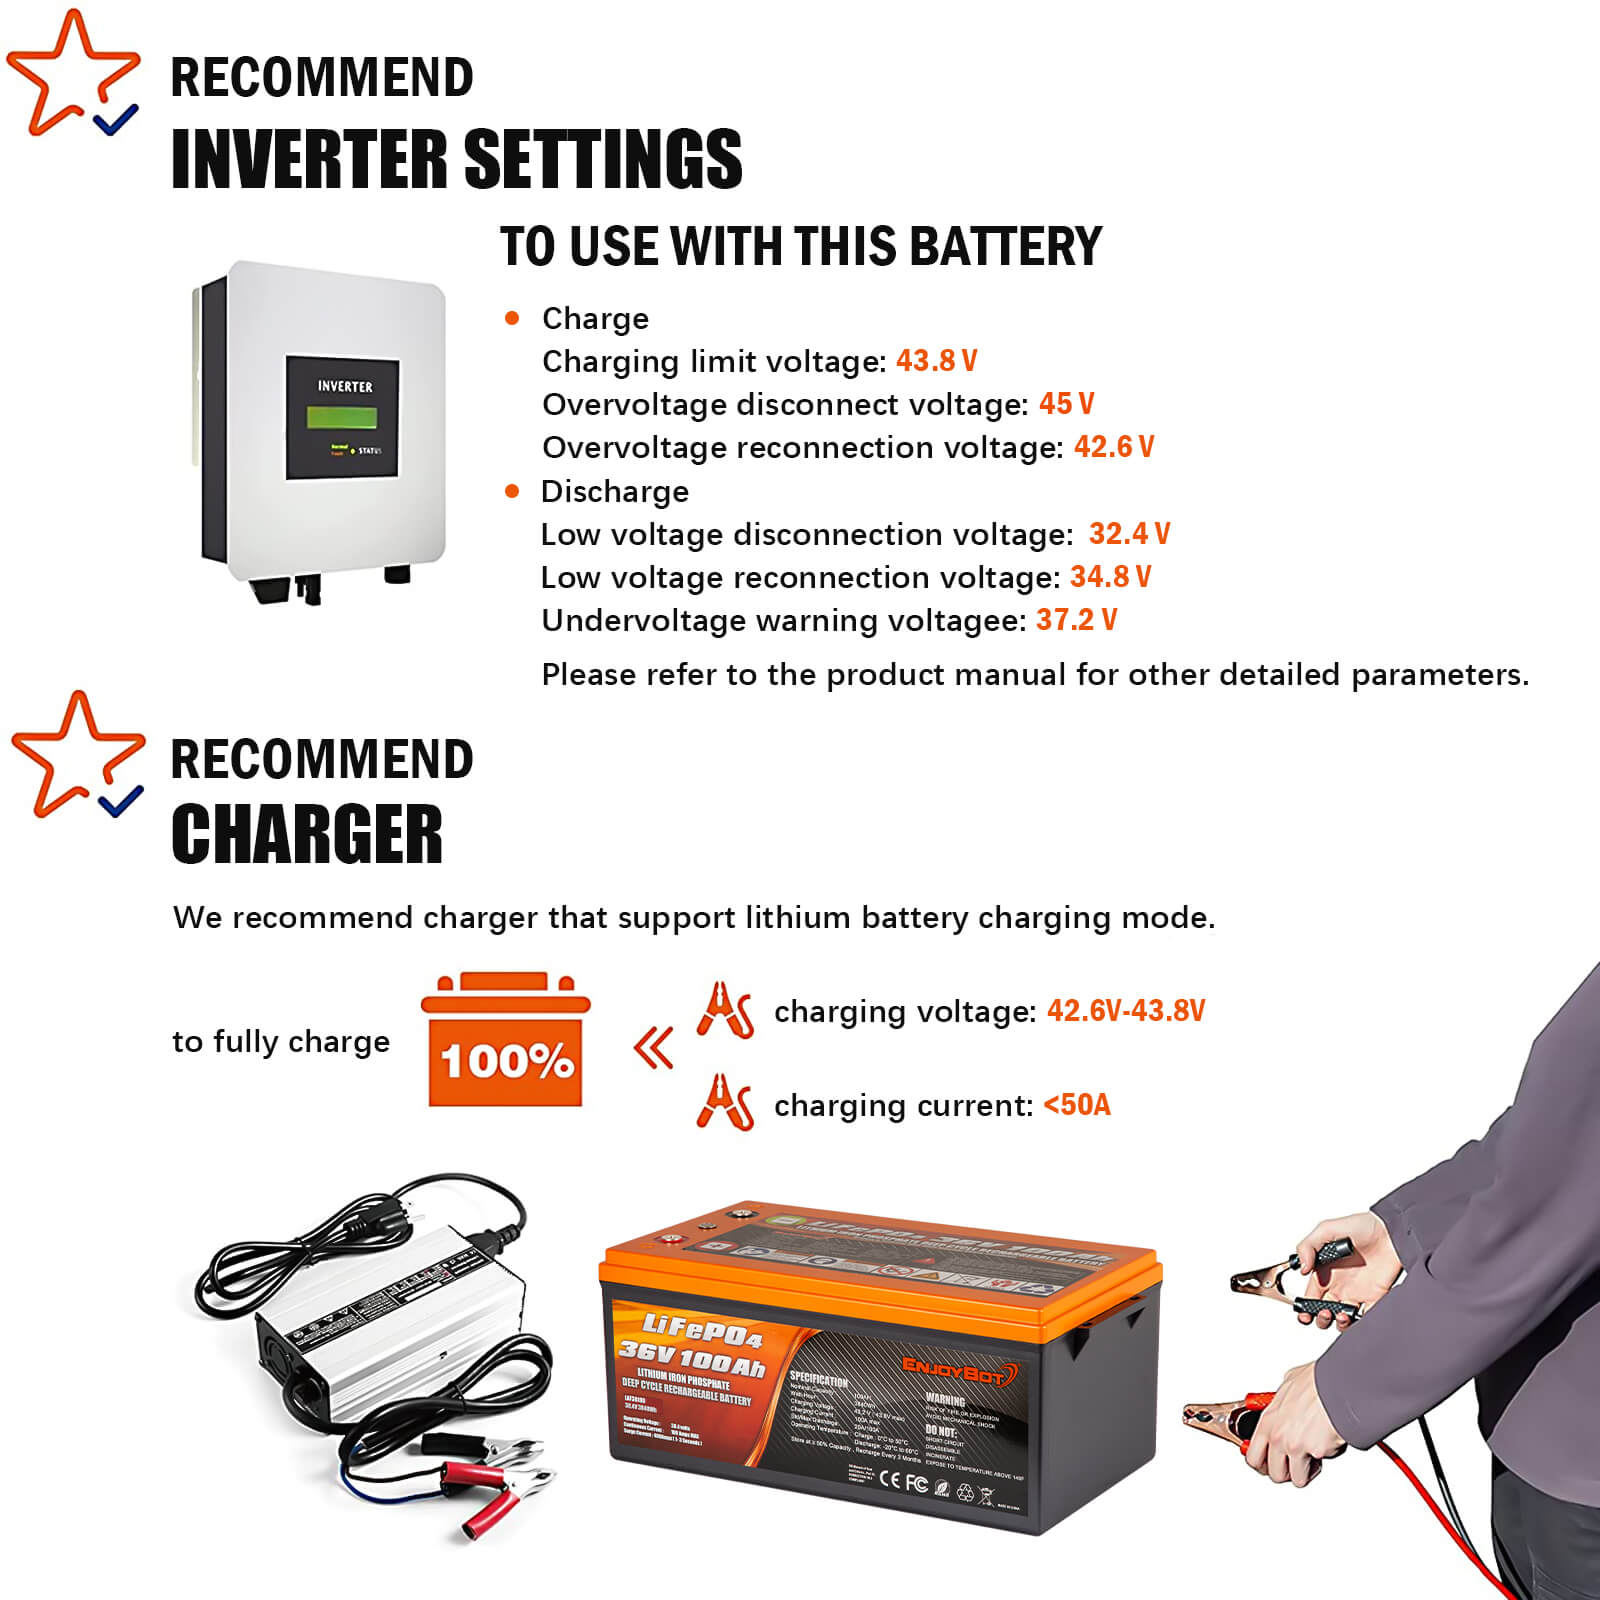 Enjoybot 36v 100ah LiFePO4 Battery - Inverter Setting